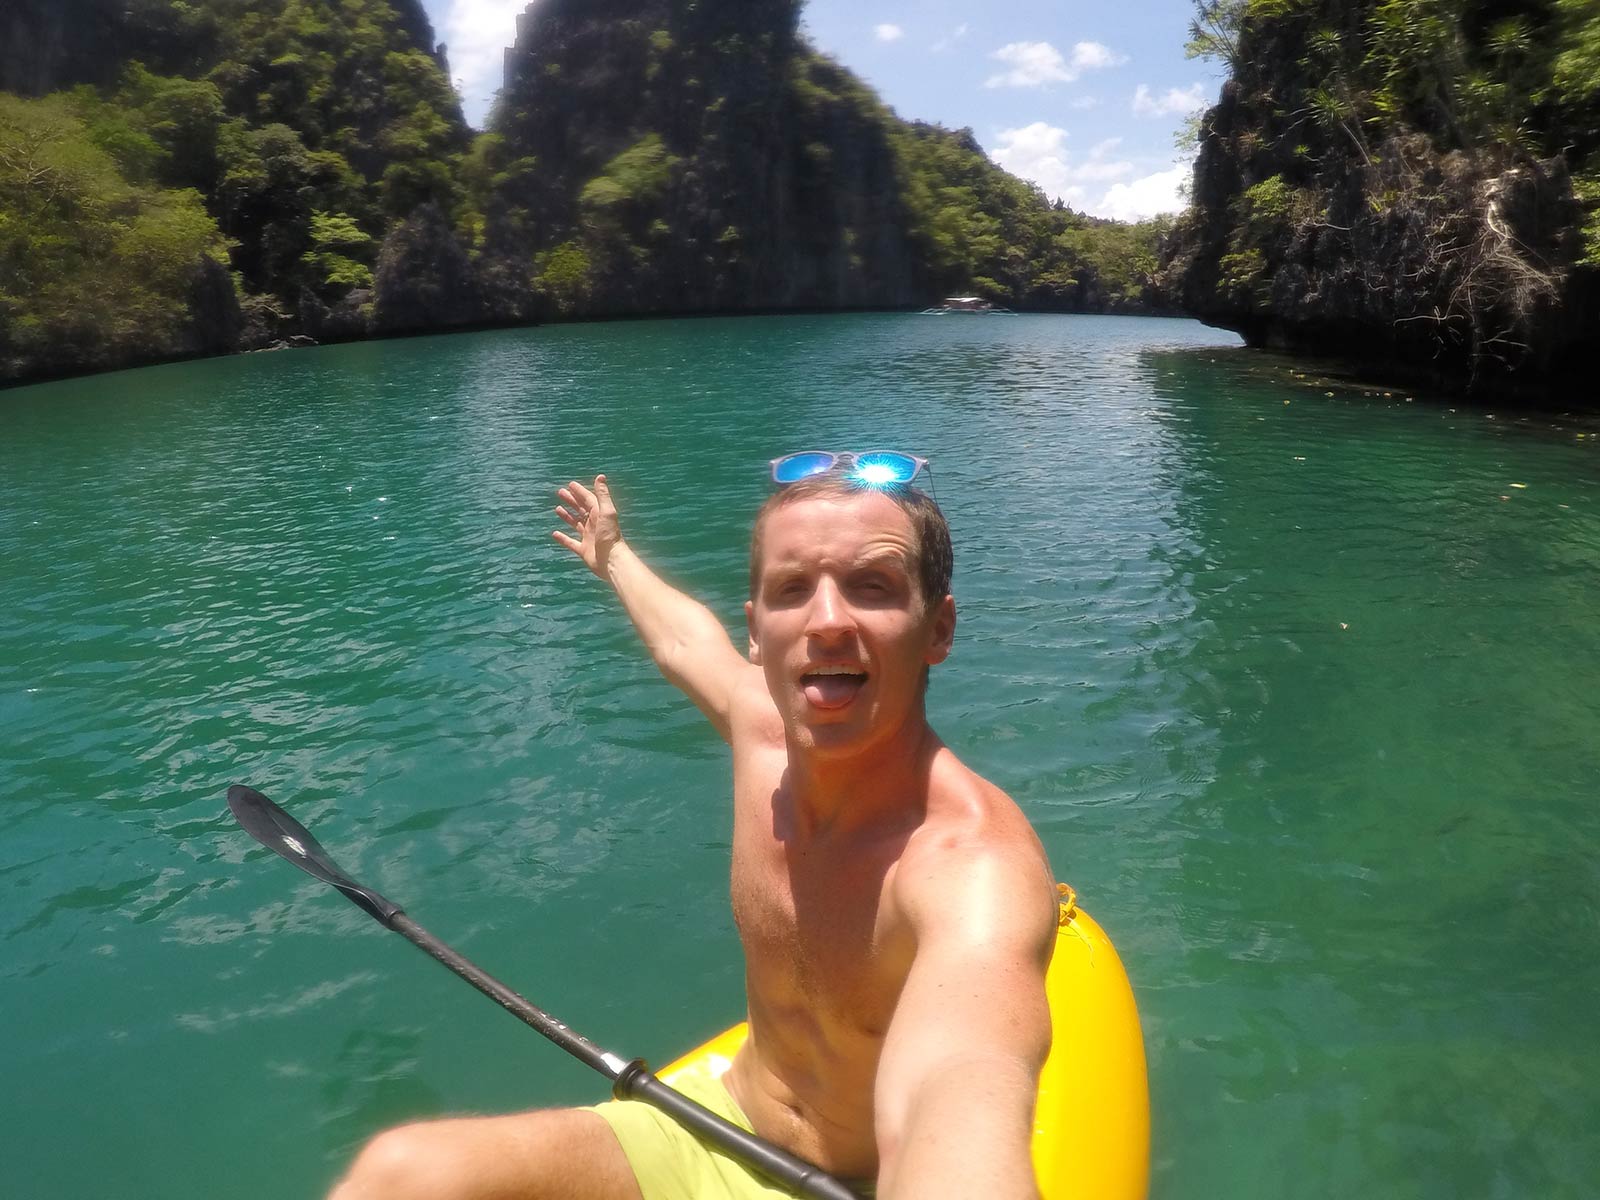 David Simpson paddling around the island in El Nido, Philippines. Paradise in Palawan, El Nido